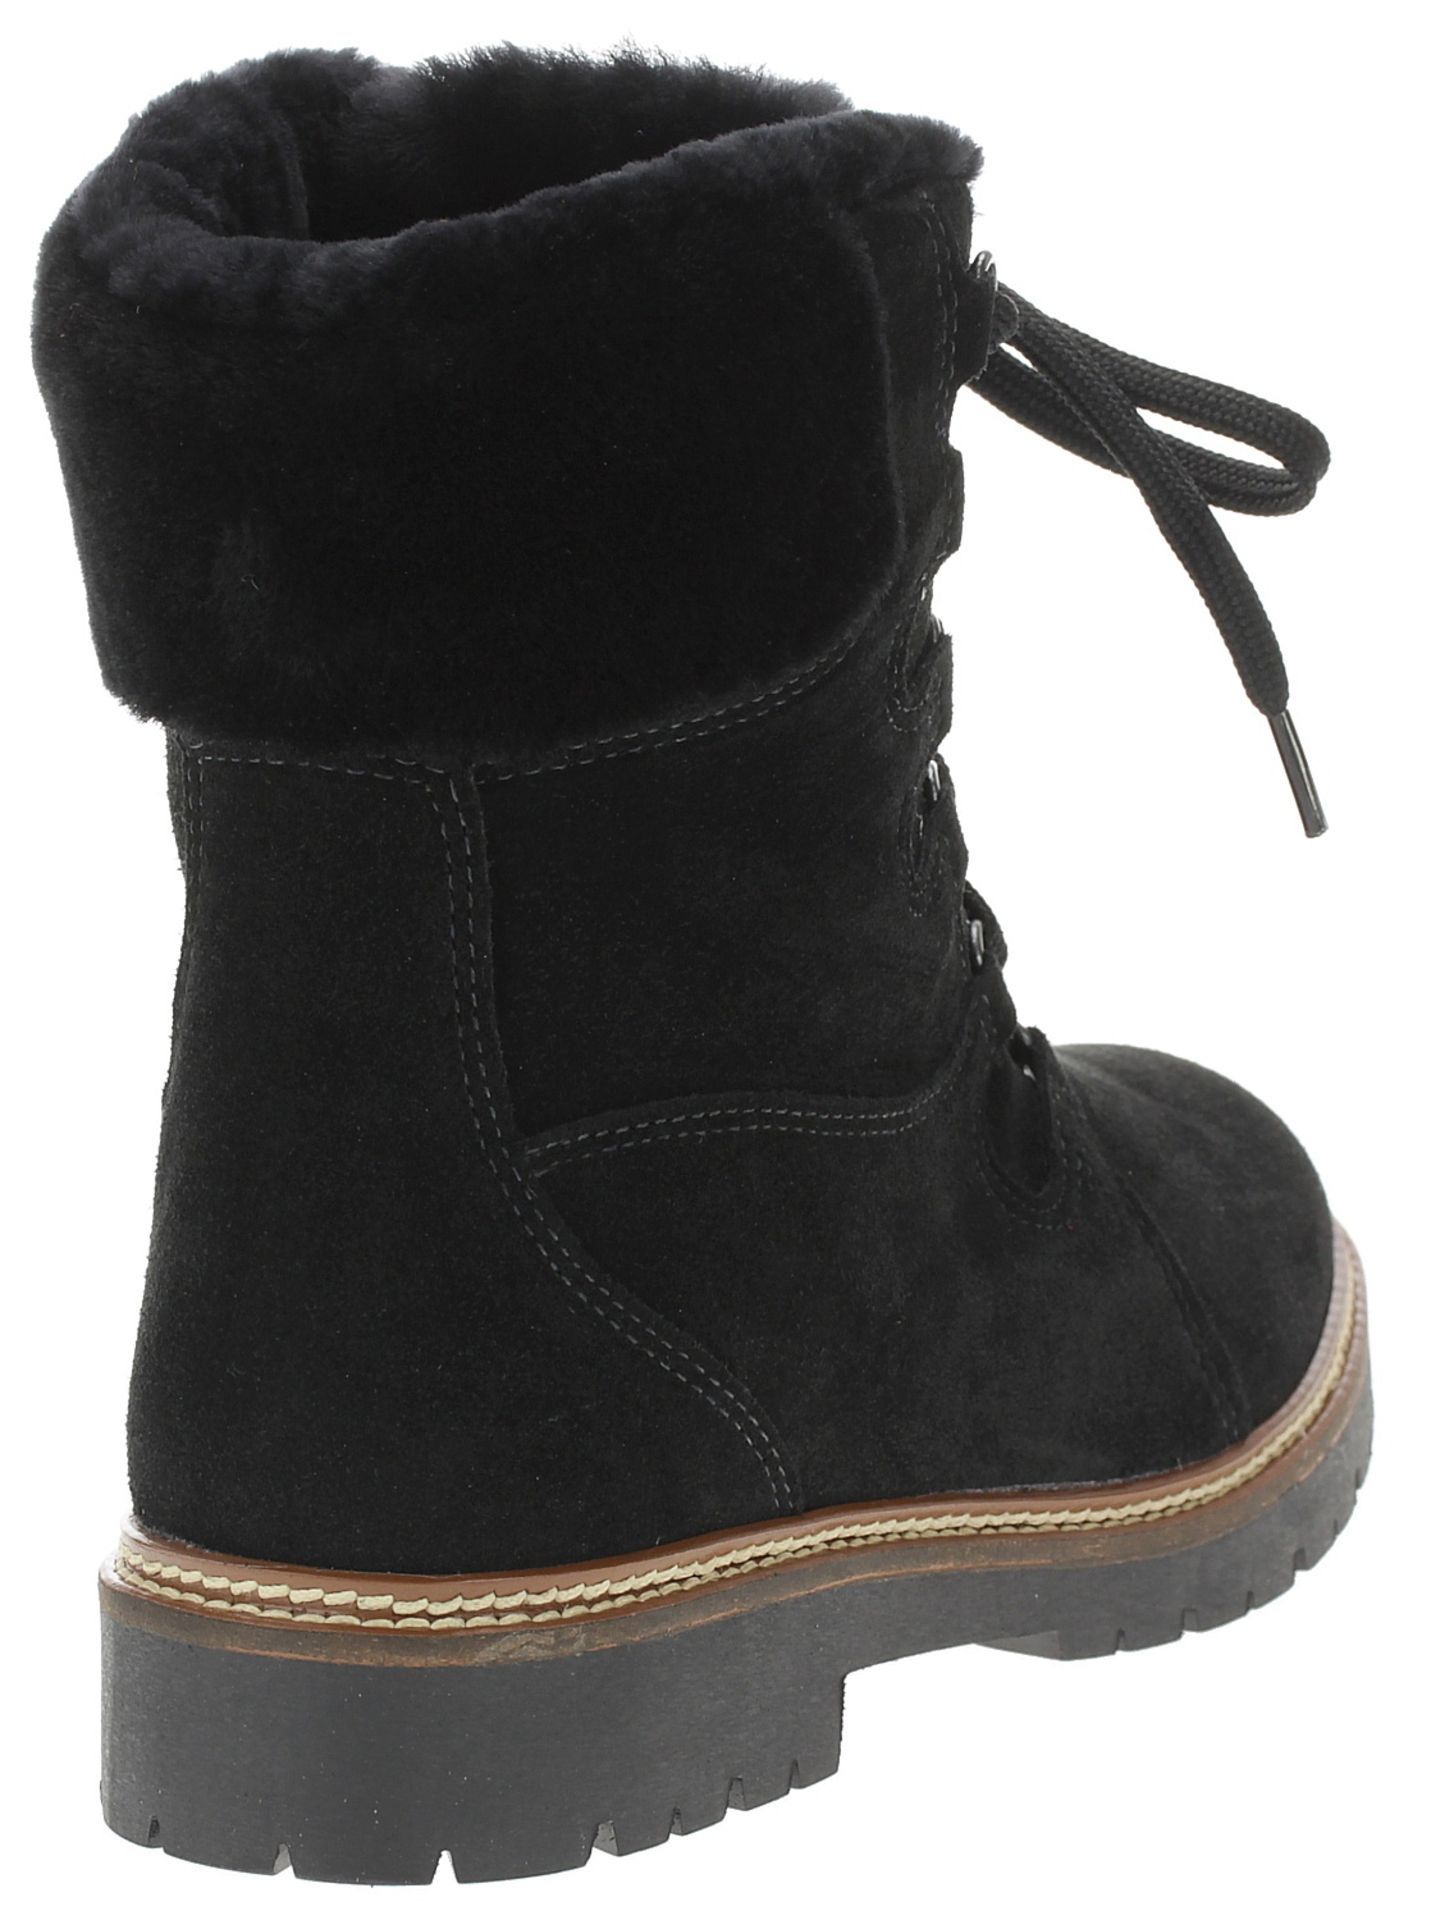 1 x Pair of Designer Olang Meribel 81 Nero Women's Winter Boots - Euro Size 38 - Brand New Boxed - Image 2 of 5